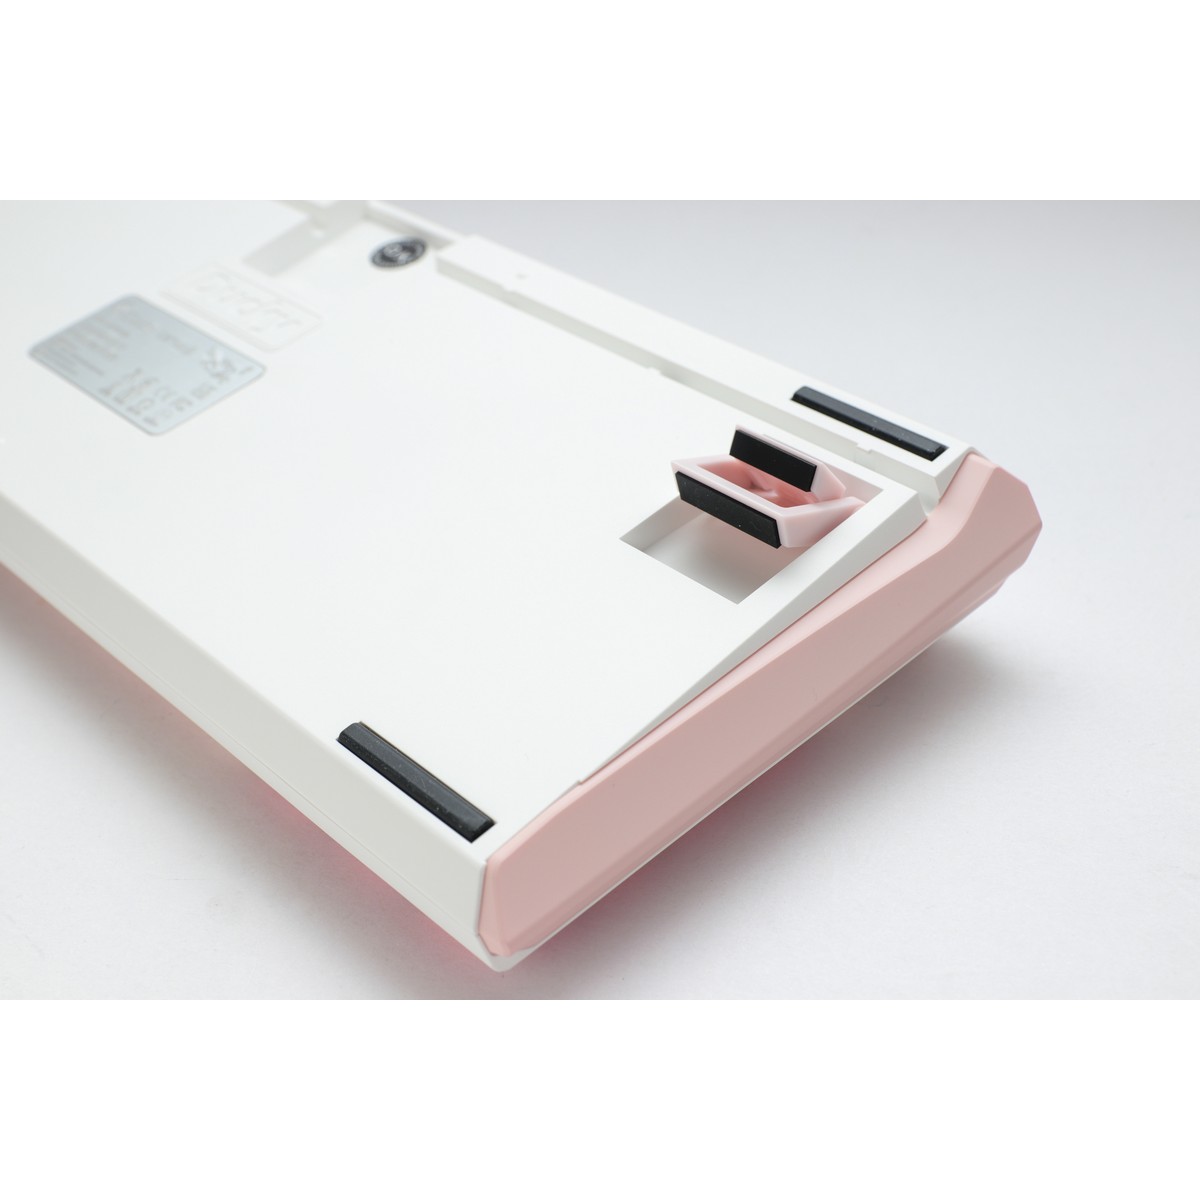 Ducky - Ducky One 3 Gossamer Pink USB Cherry MX Brown Mechanical Gaming Keyboard UK Layo